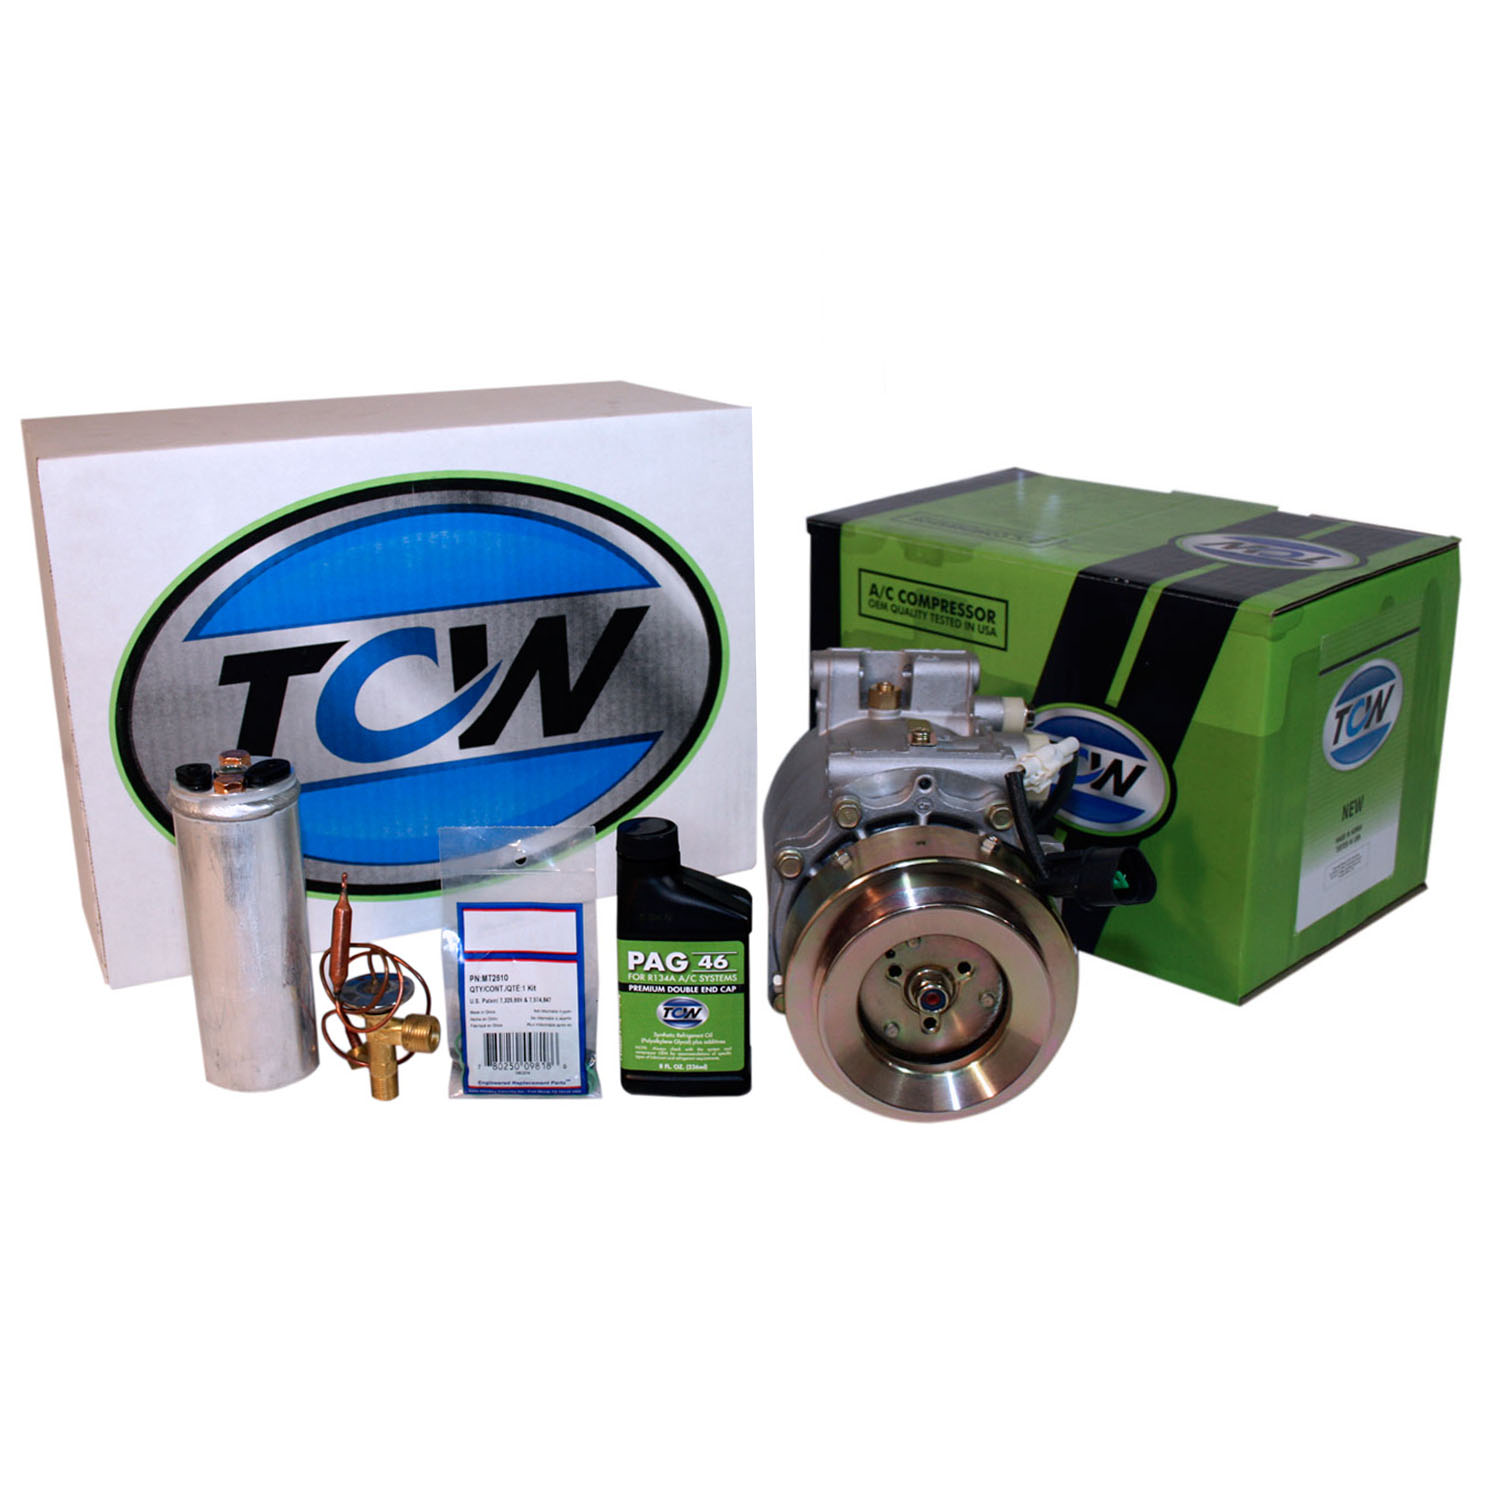 TCW Vehicle A/C Kit K1000267N New Product Image field_60b6a13a6e67c